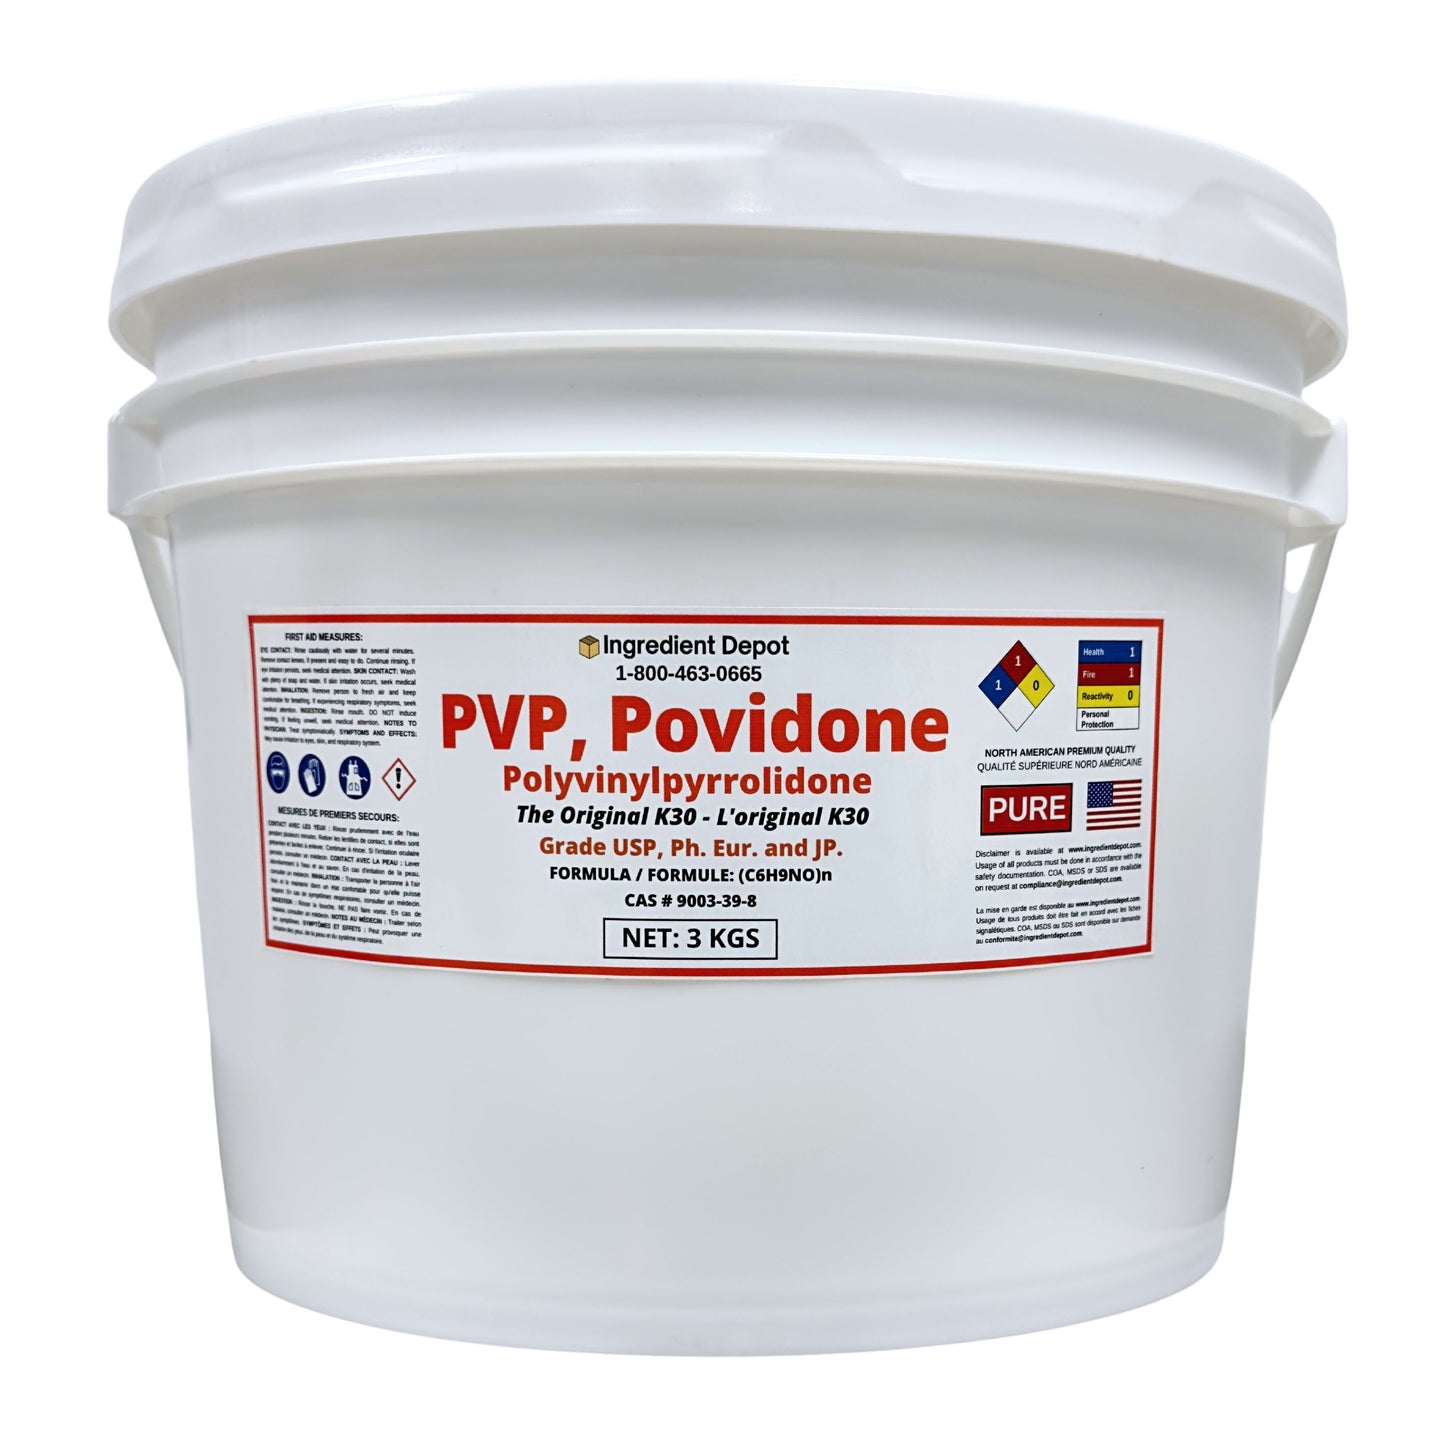 PVP Original K30, Povidone, Polyvinylpyrrolidone 3 kgs